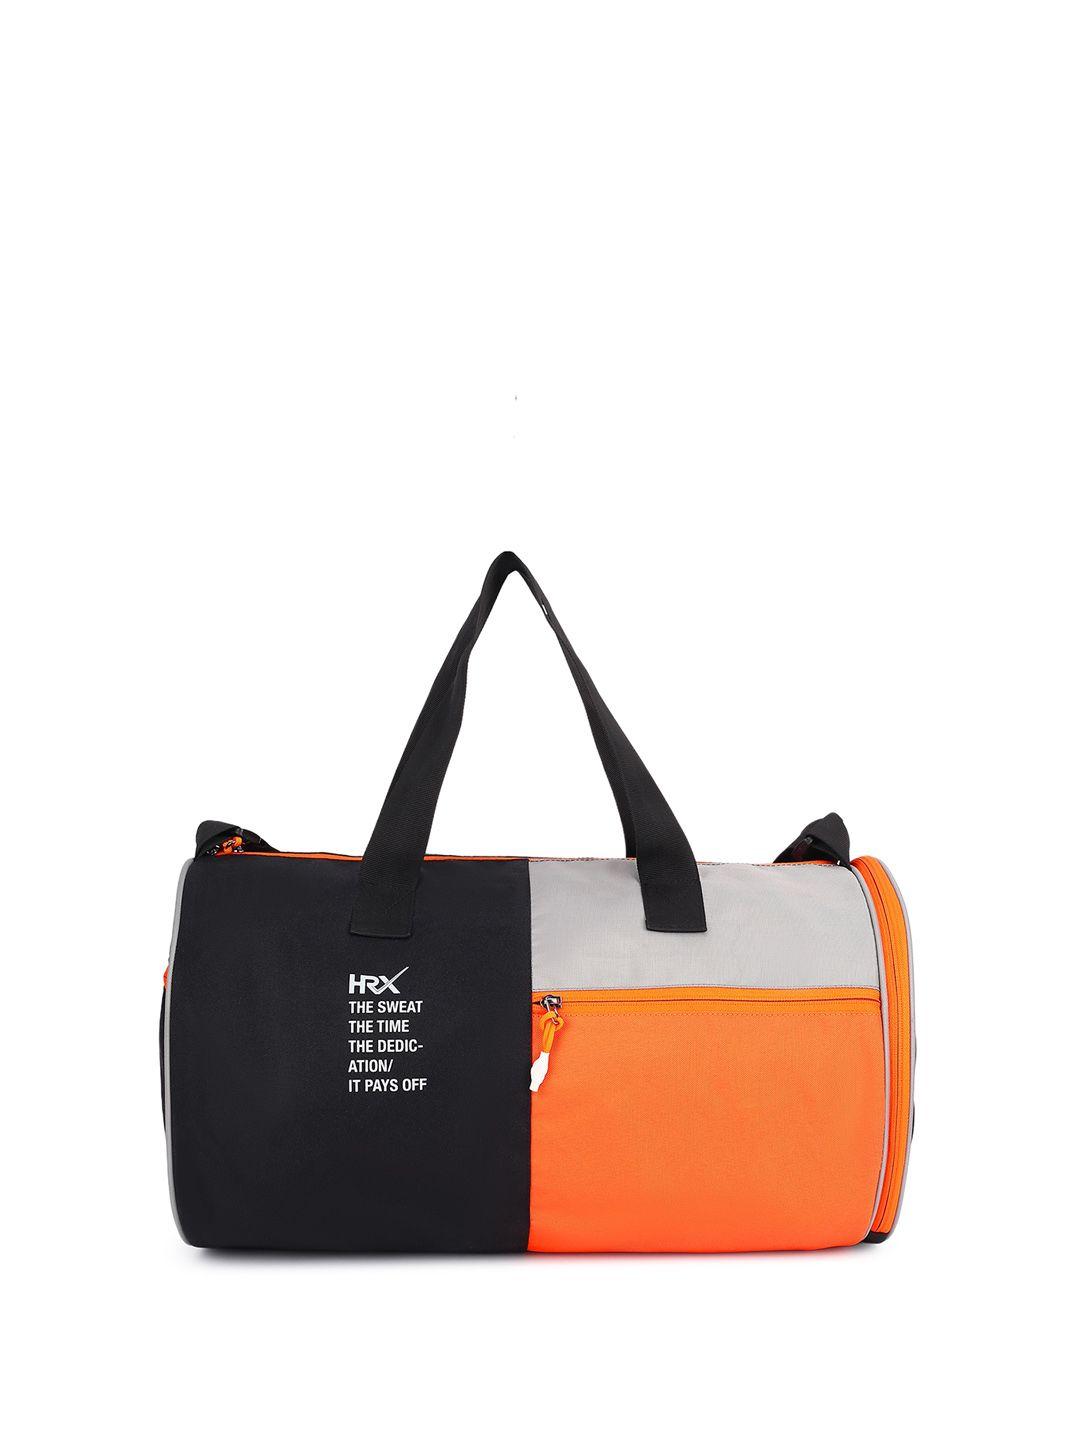 hrx by hrithik roshan grey & black colourblocked duffel bag